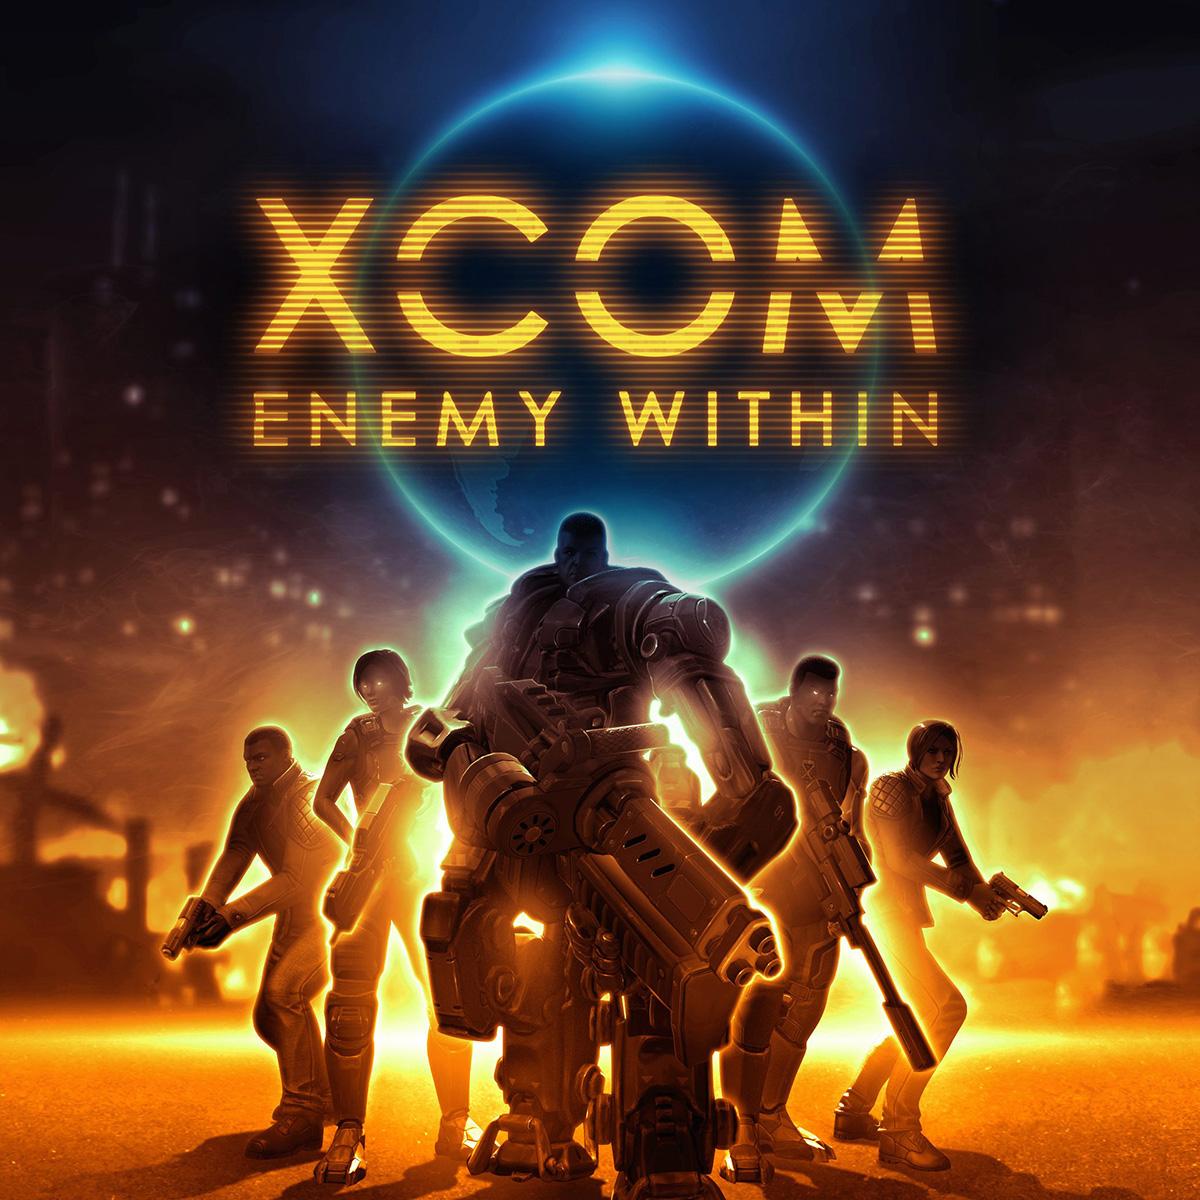 XCOM Enemy Within App for $1.99